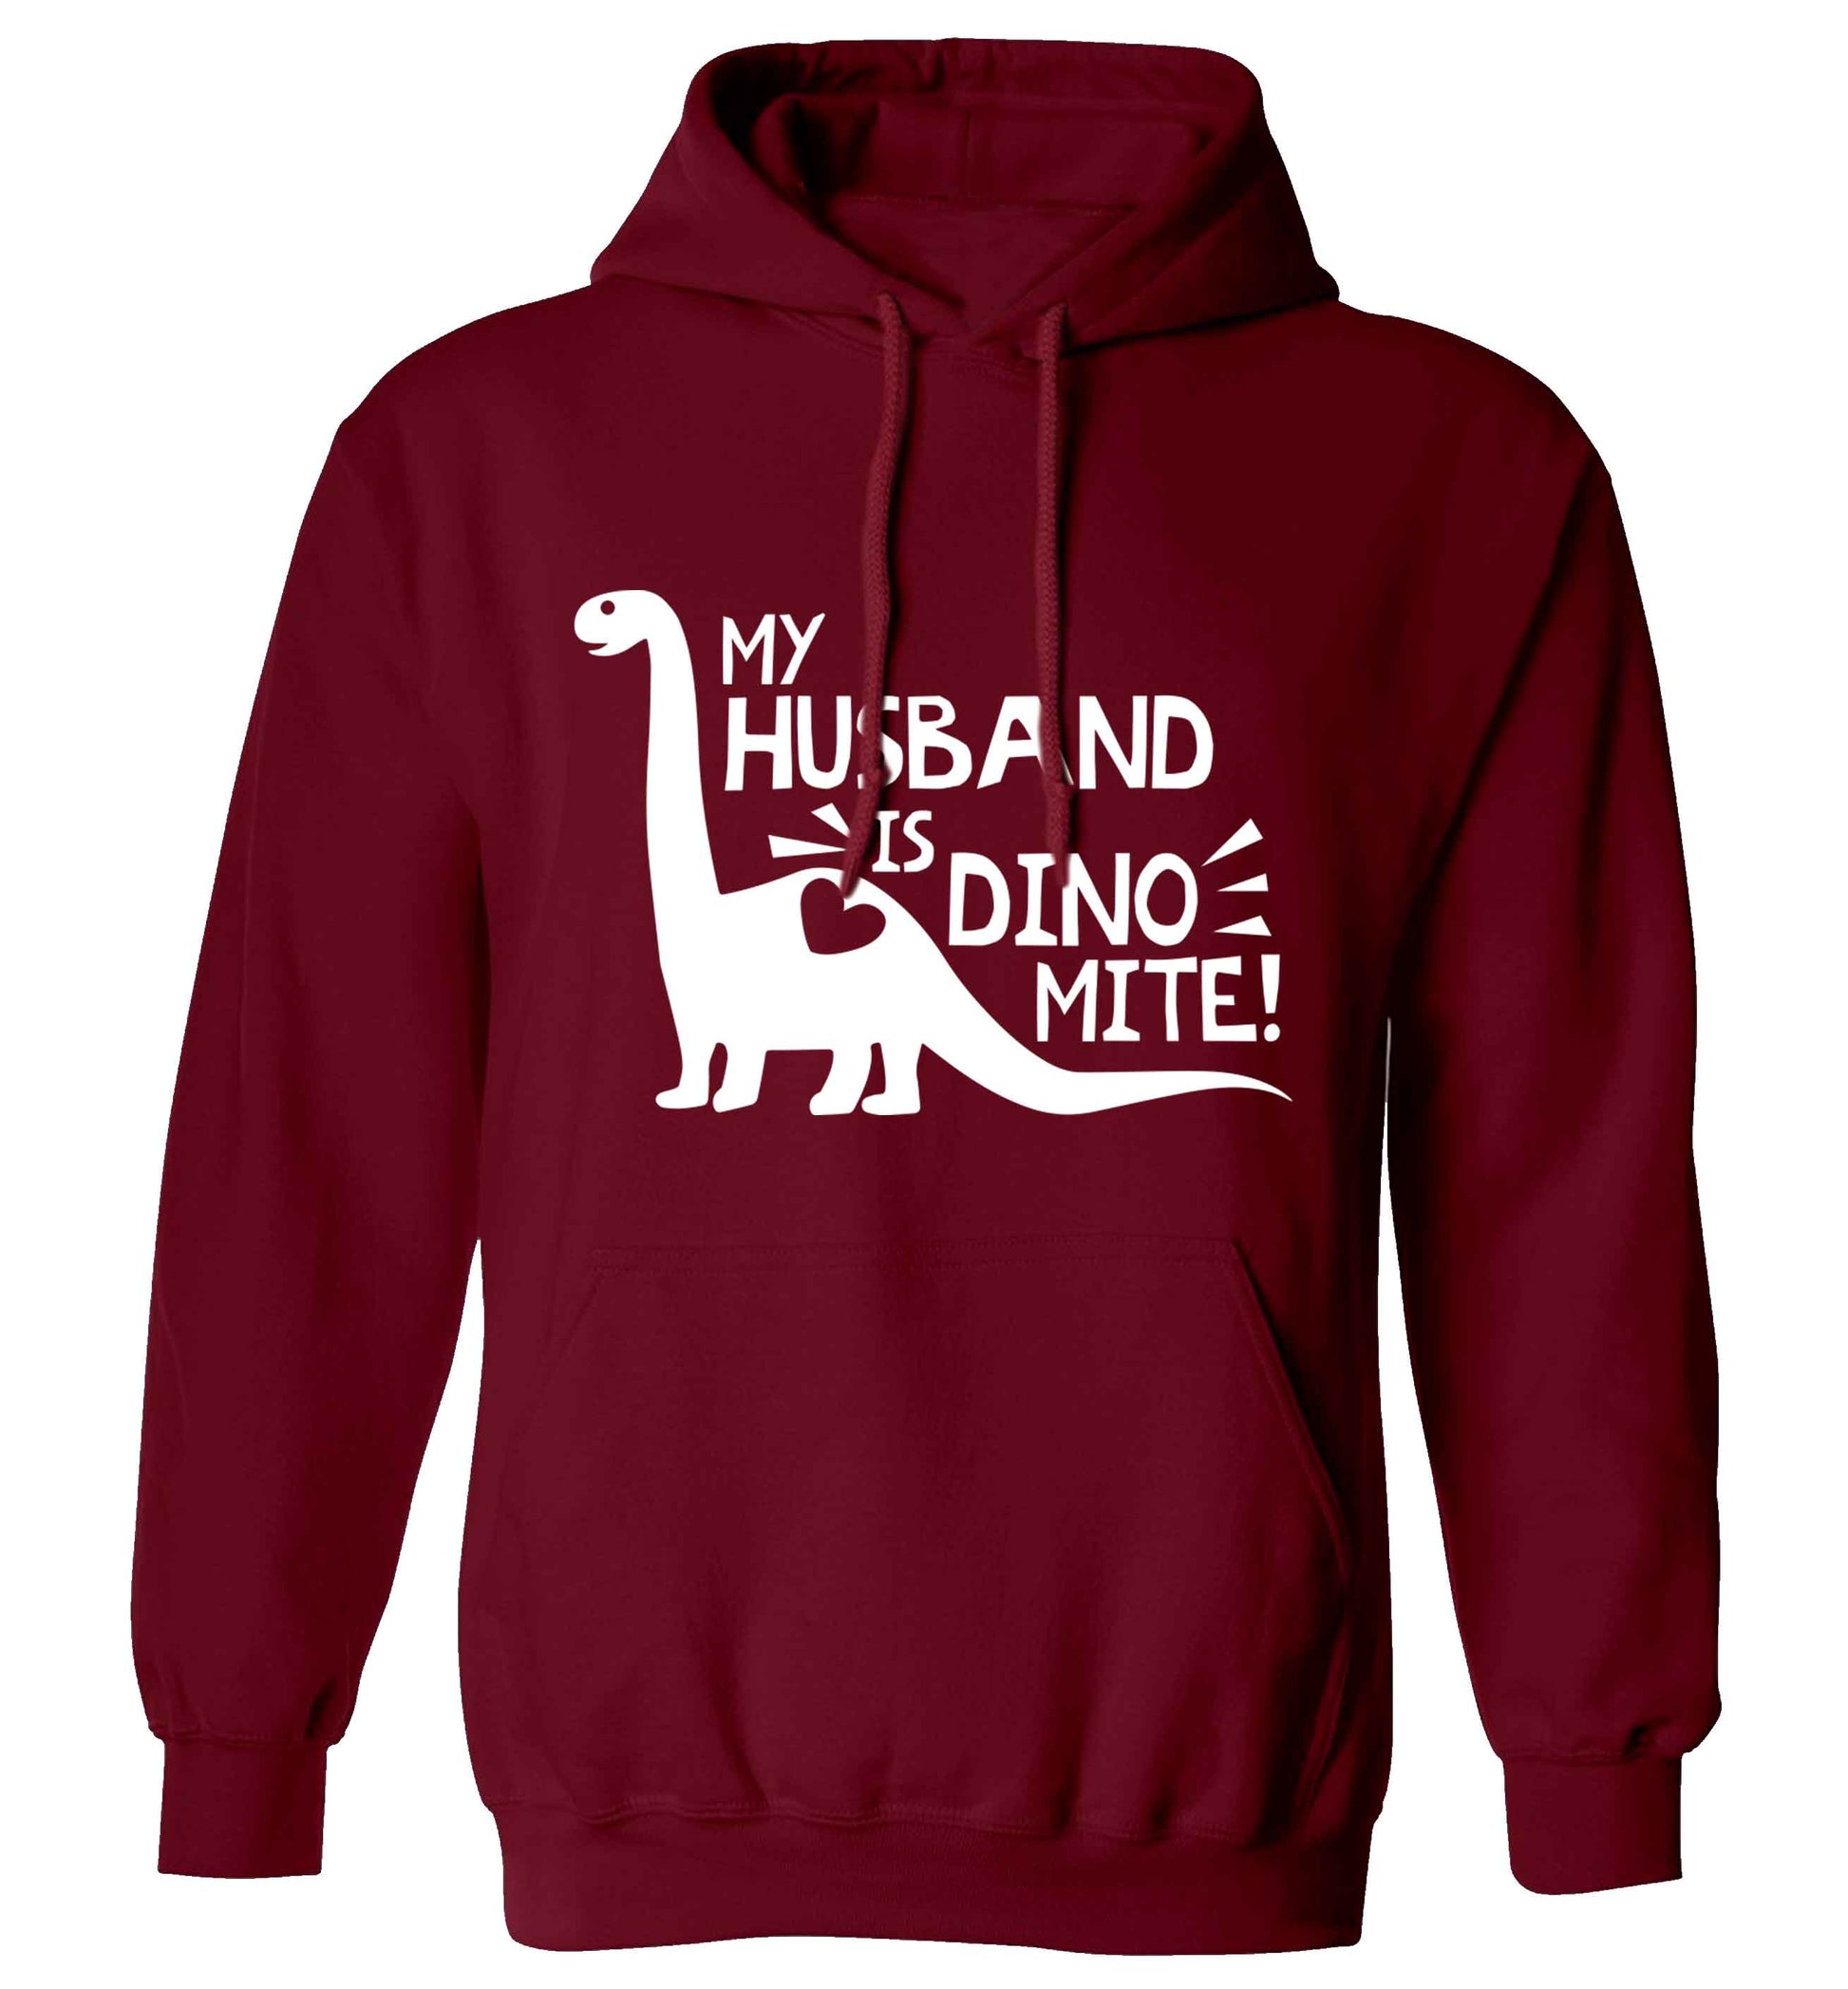 My husband is dinomite! adults unisex maroon hoodie 2XL